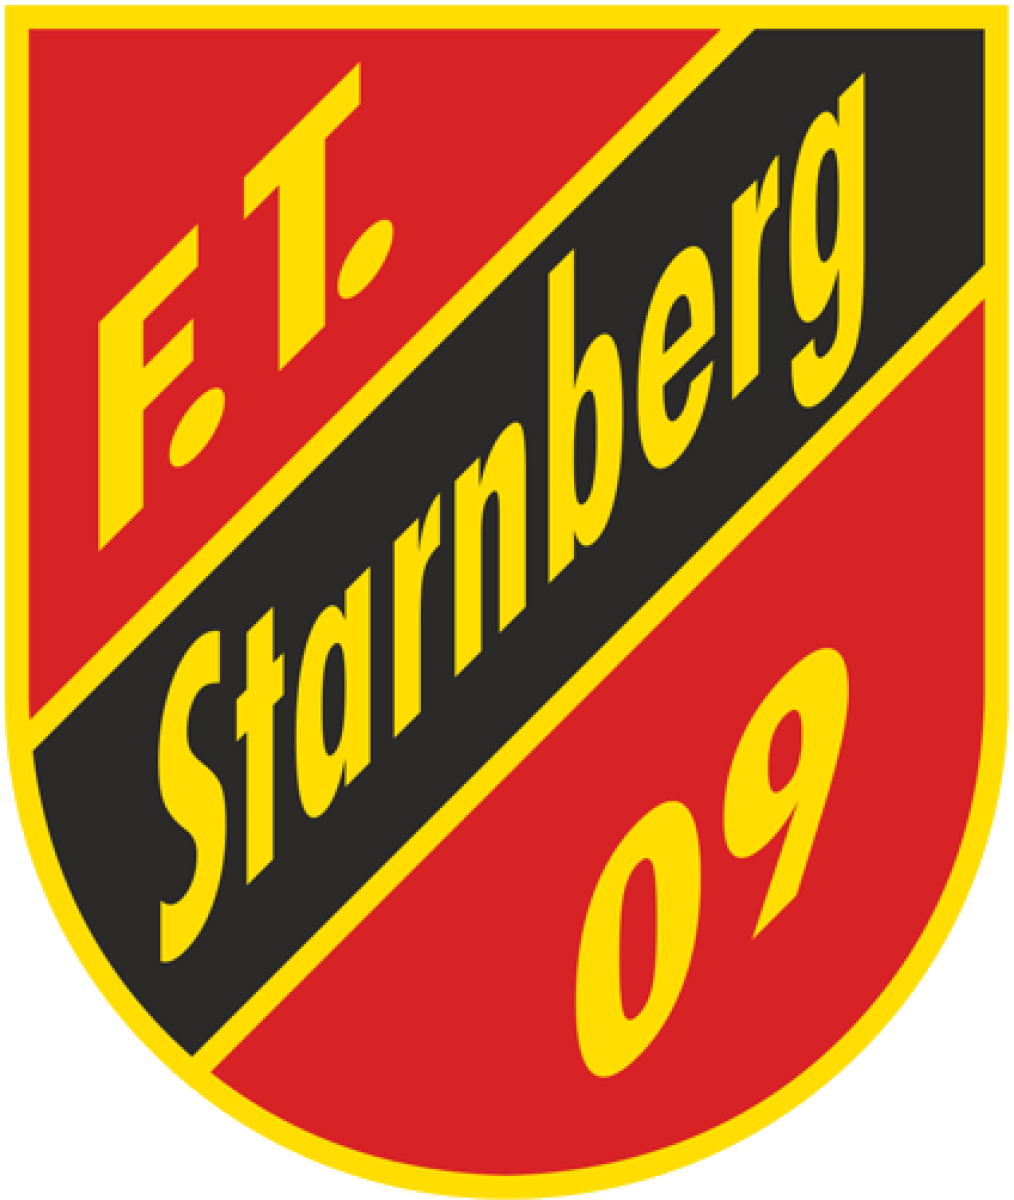 «Штарнберг-09 II» Штарнберг, Фото